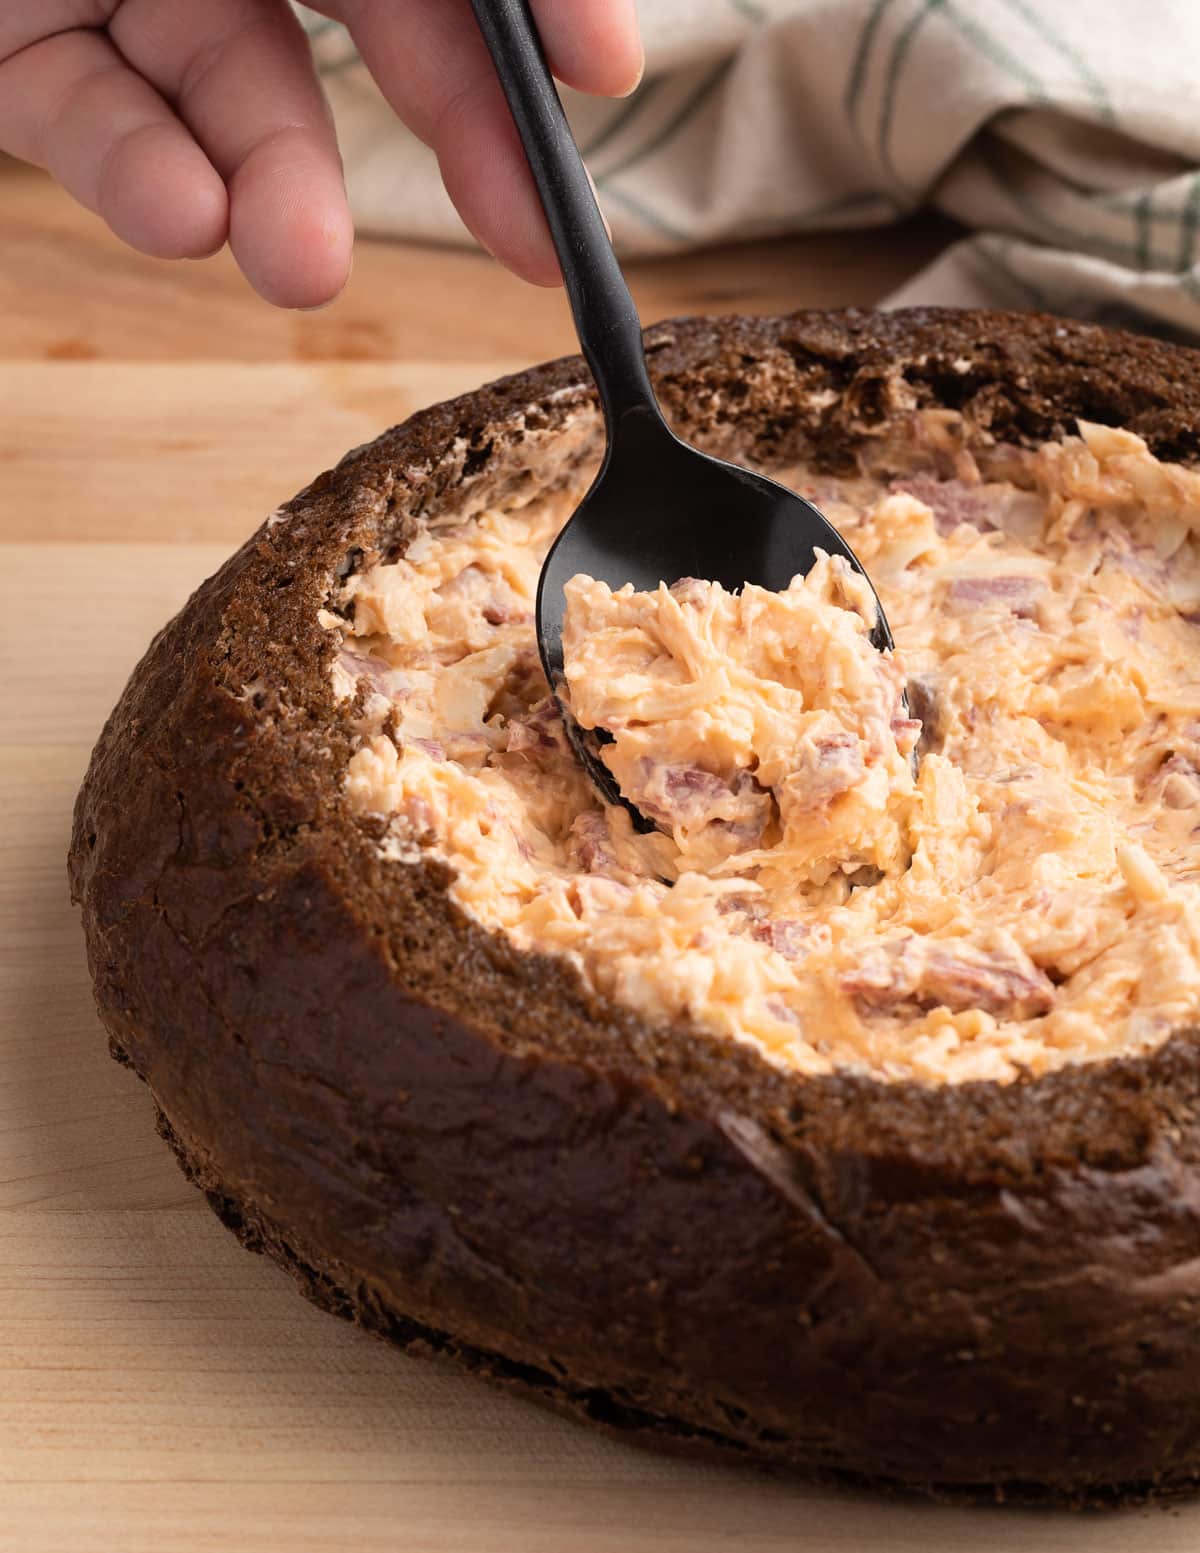 reuben dip being spooned into a pumpernickel bread bowl with a black spoon